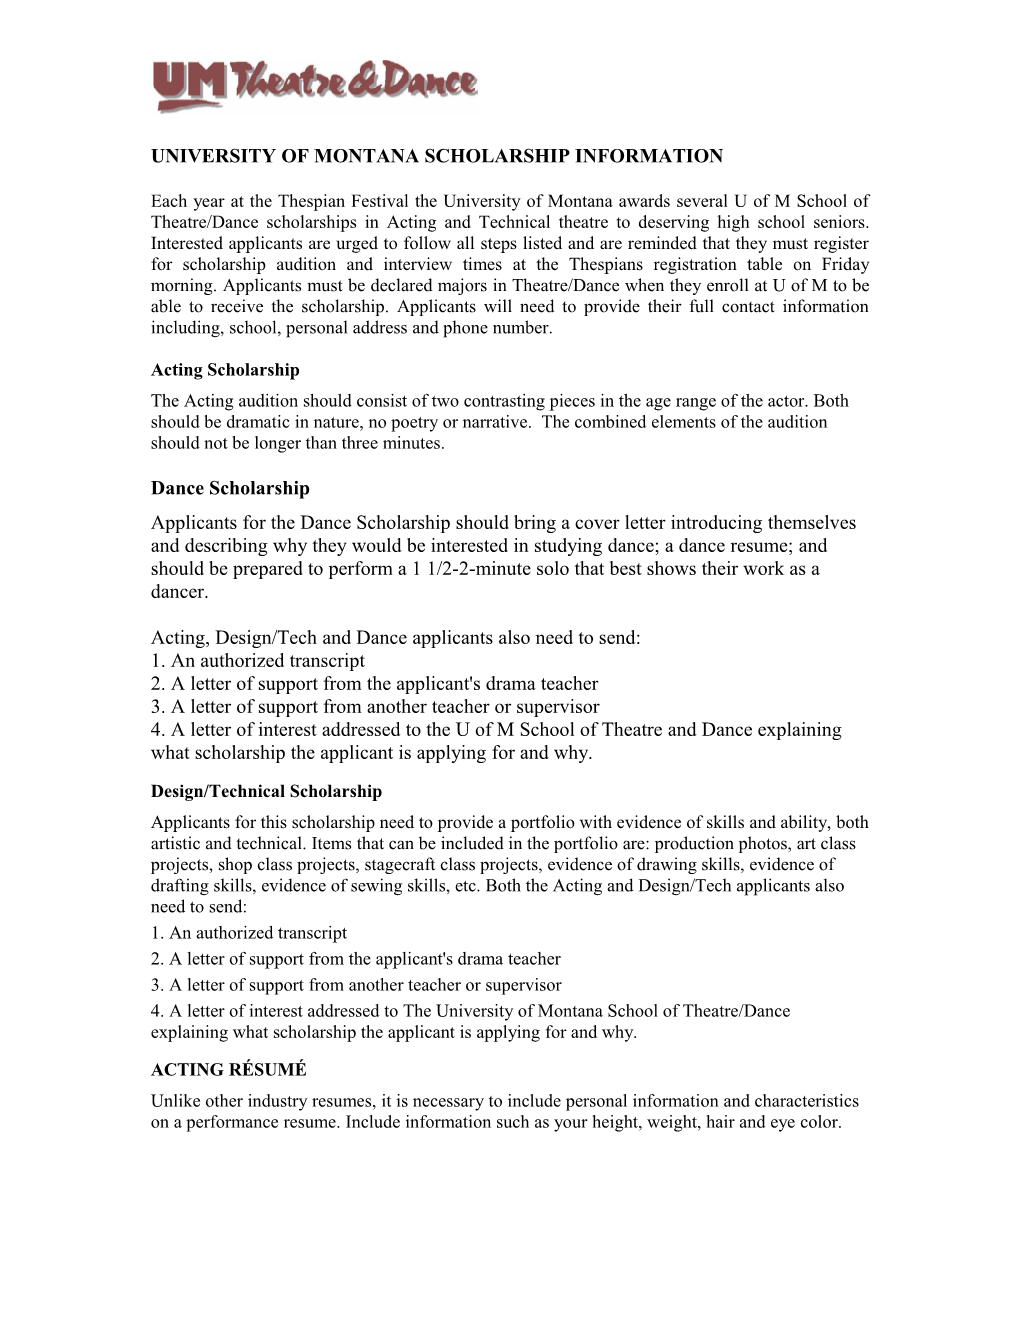 University of Montana Scholarship Information